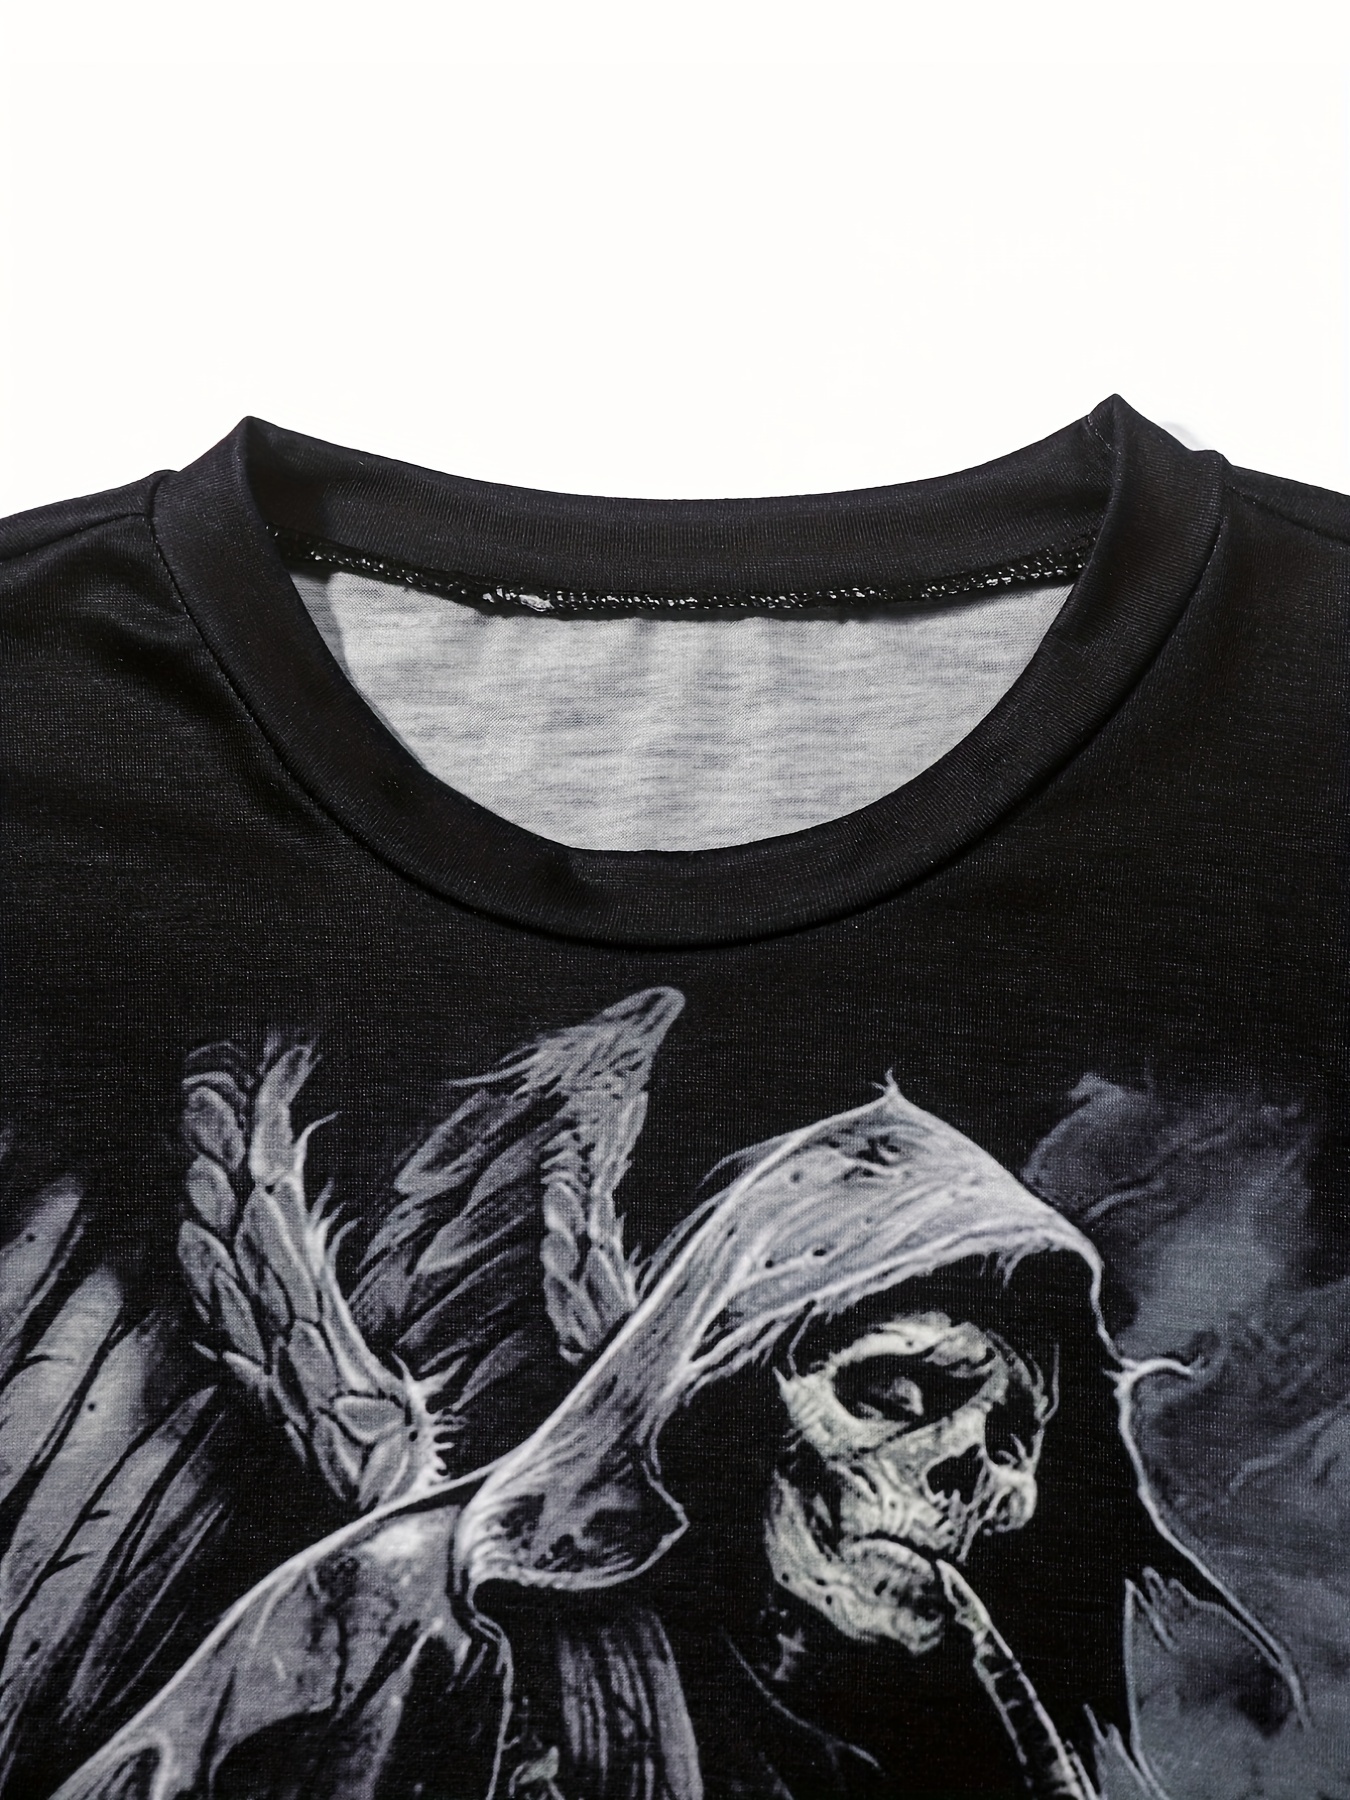 Halloween T-Shirt - Grim Reaper – Grunt Style, LLC